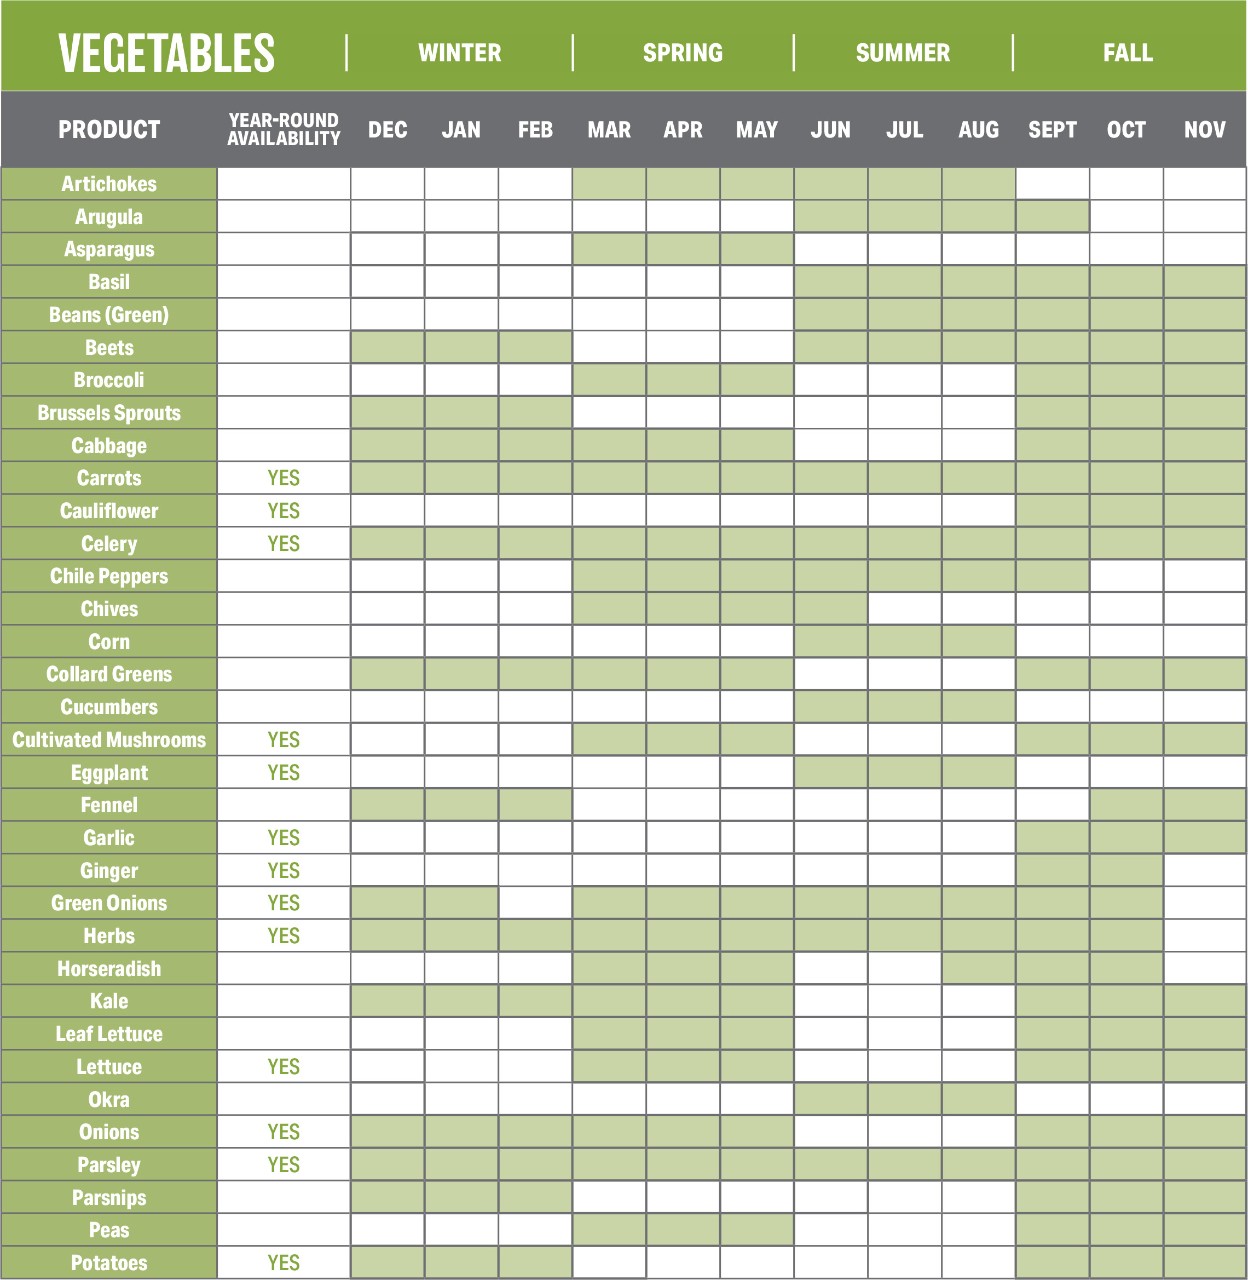 Seasonal Produce Guide - Vegetables